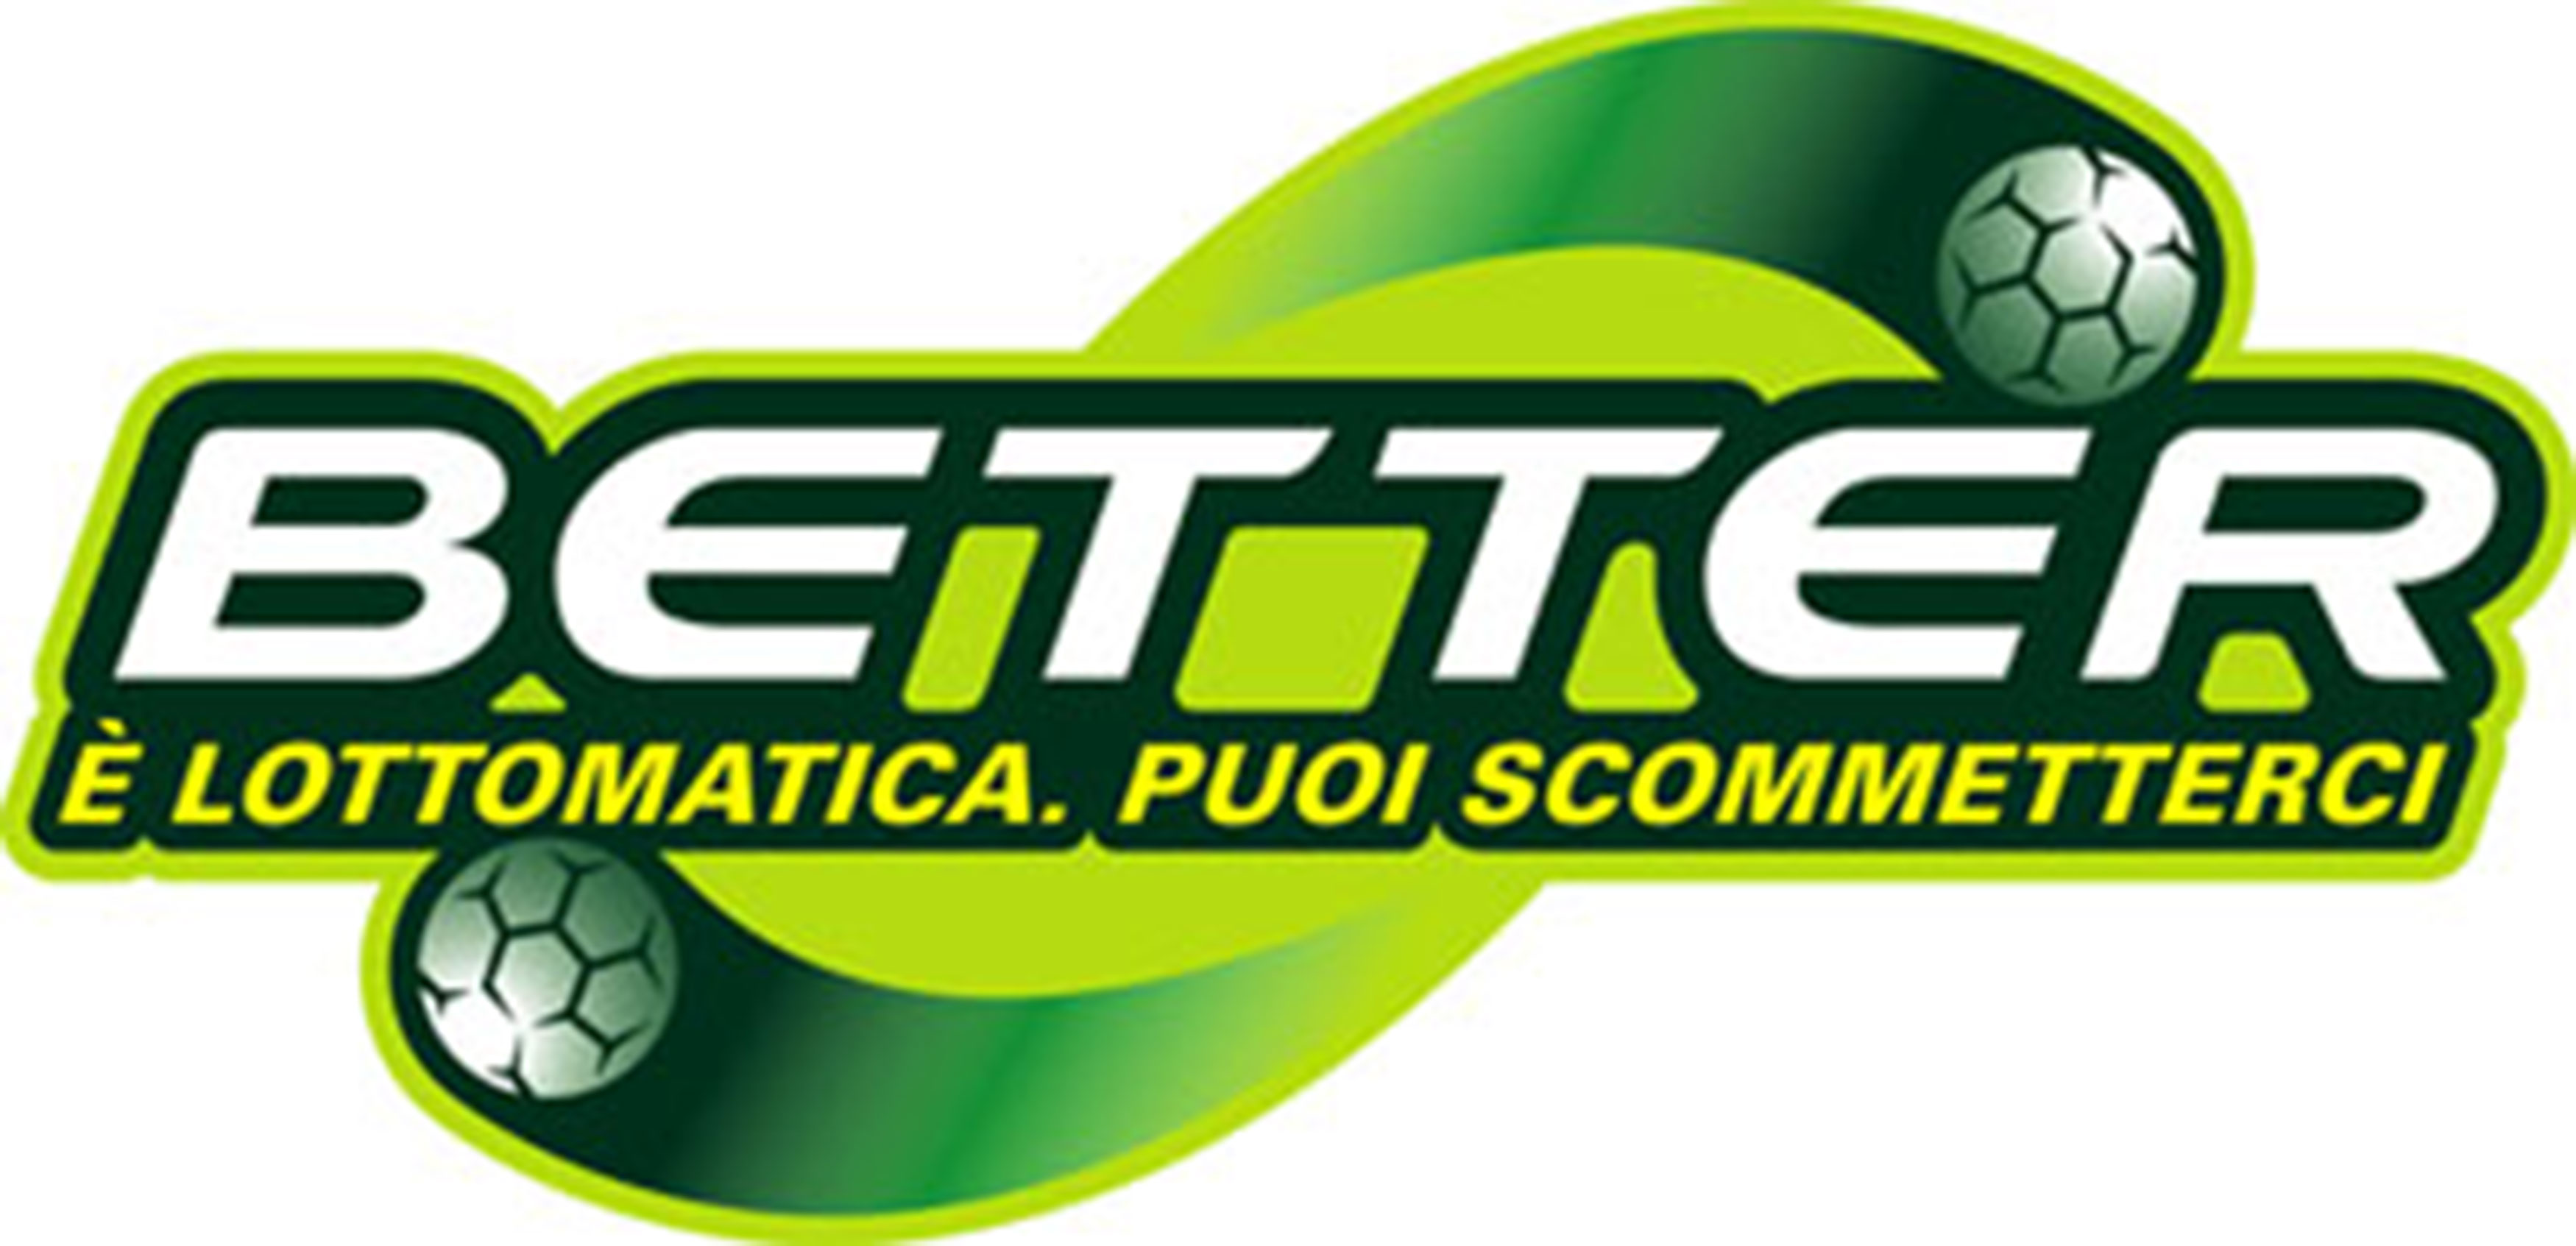 Lottomatica Better Slot Logo photo - 1